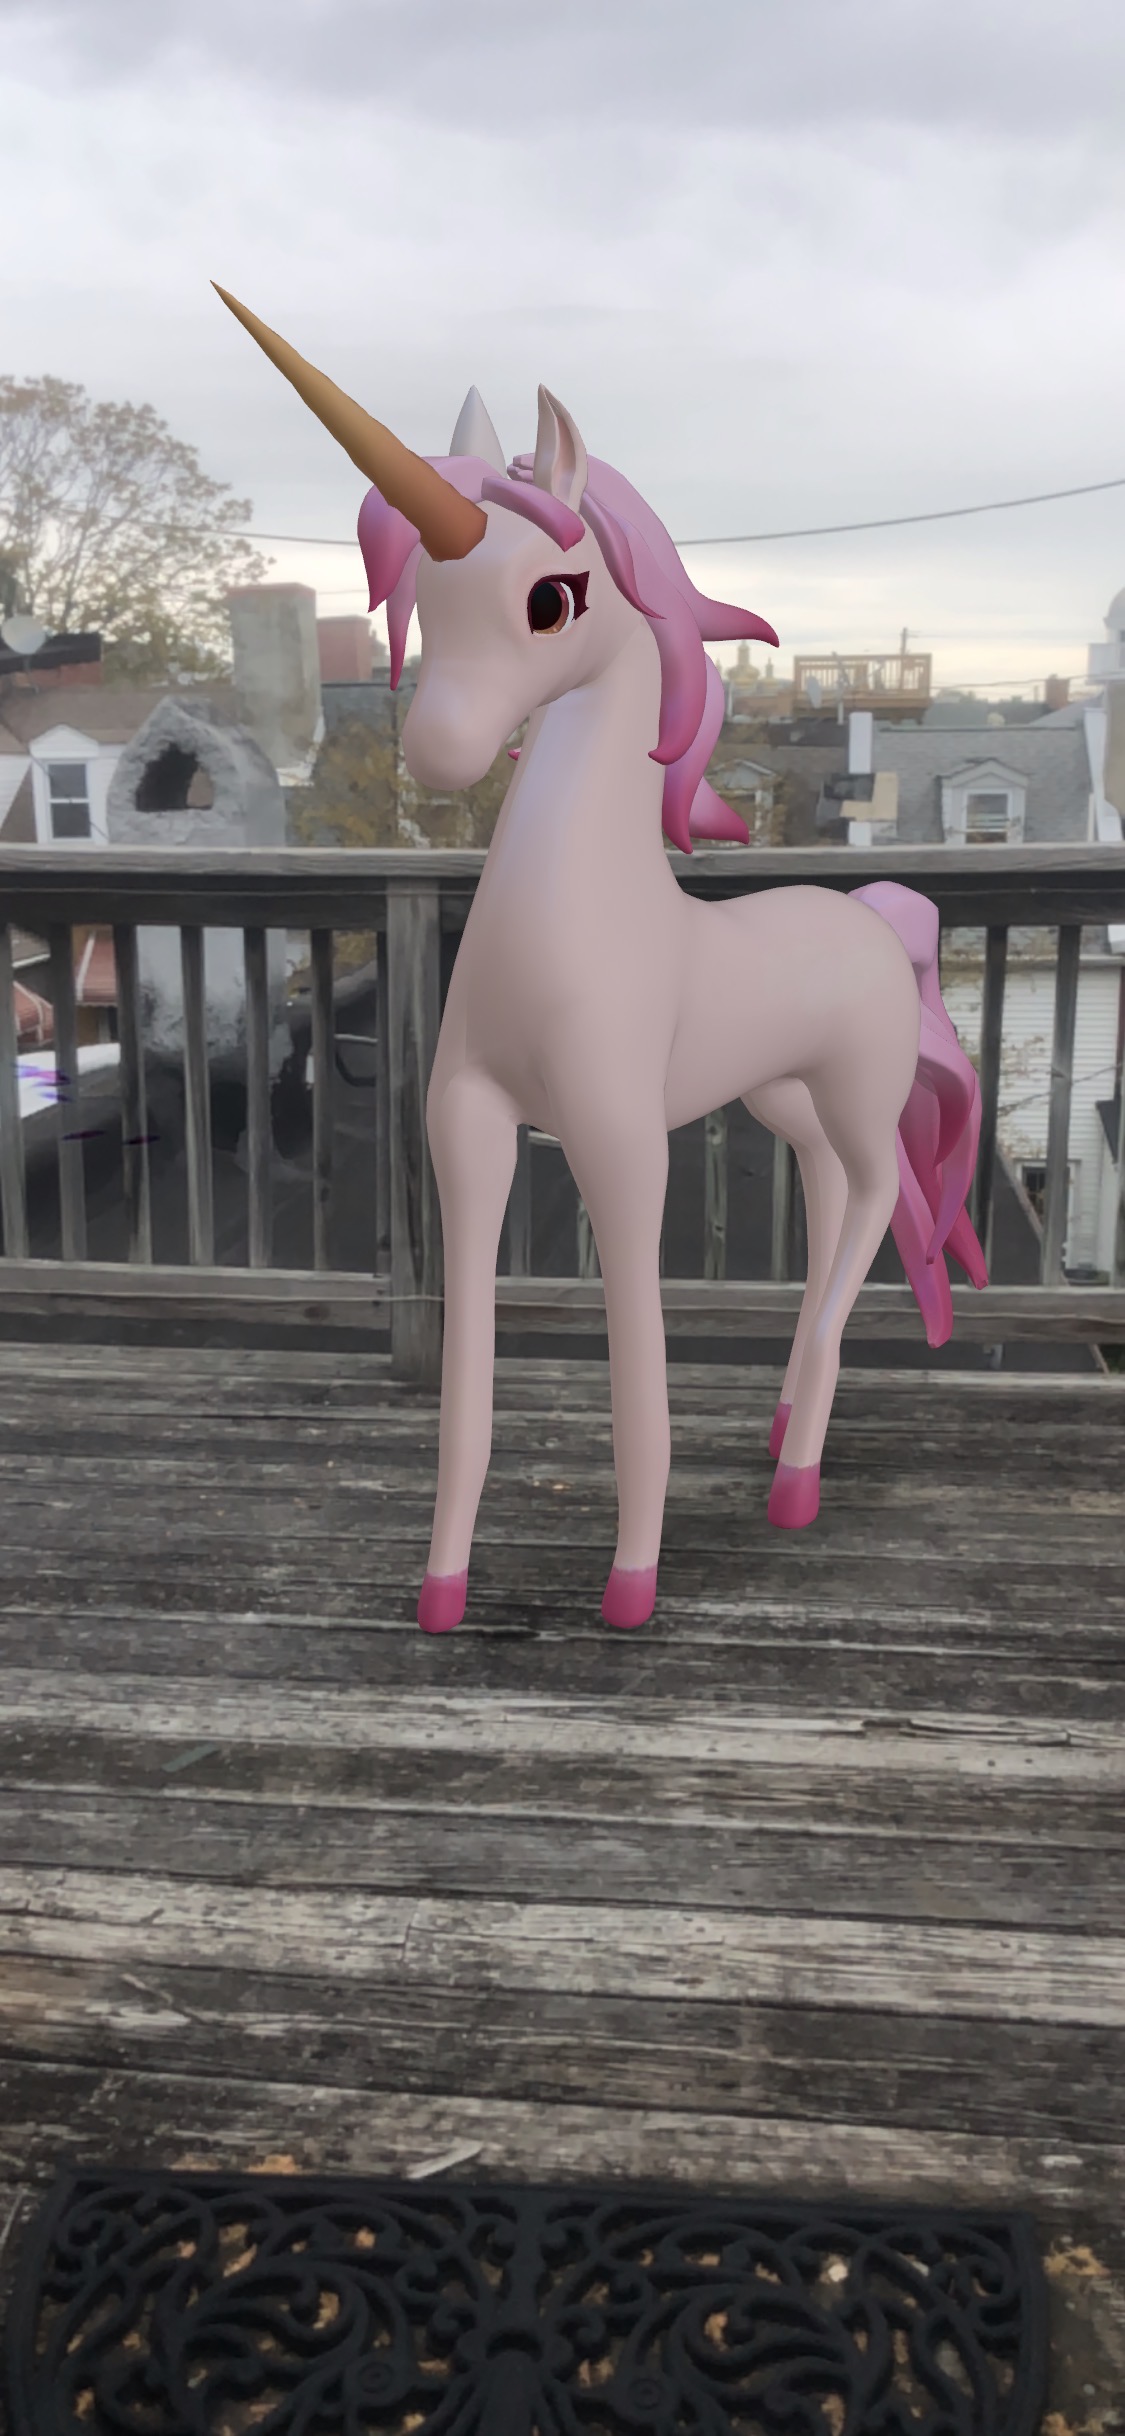 Balti Virtual found a unicorn on a roof deck. (Courtesy photo)